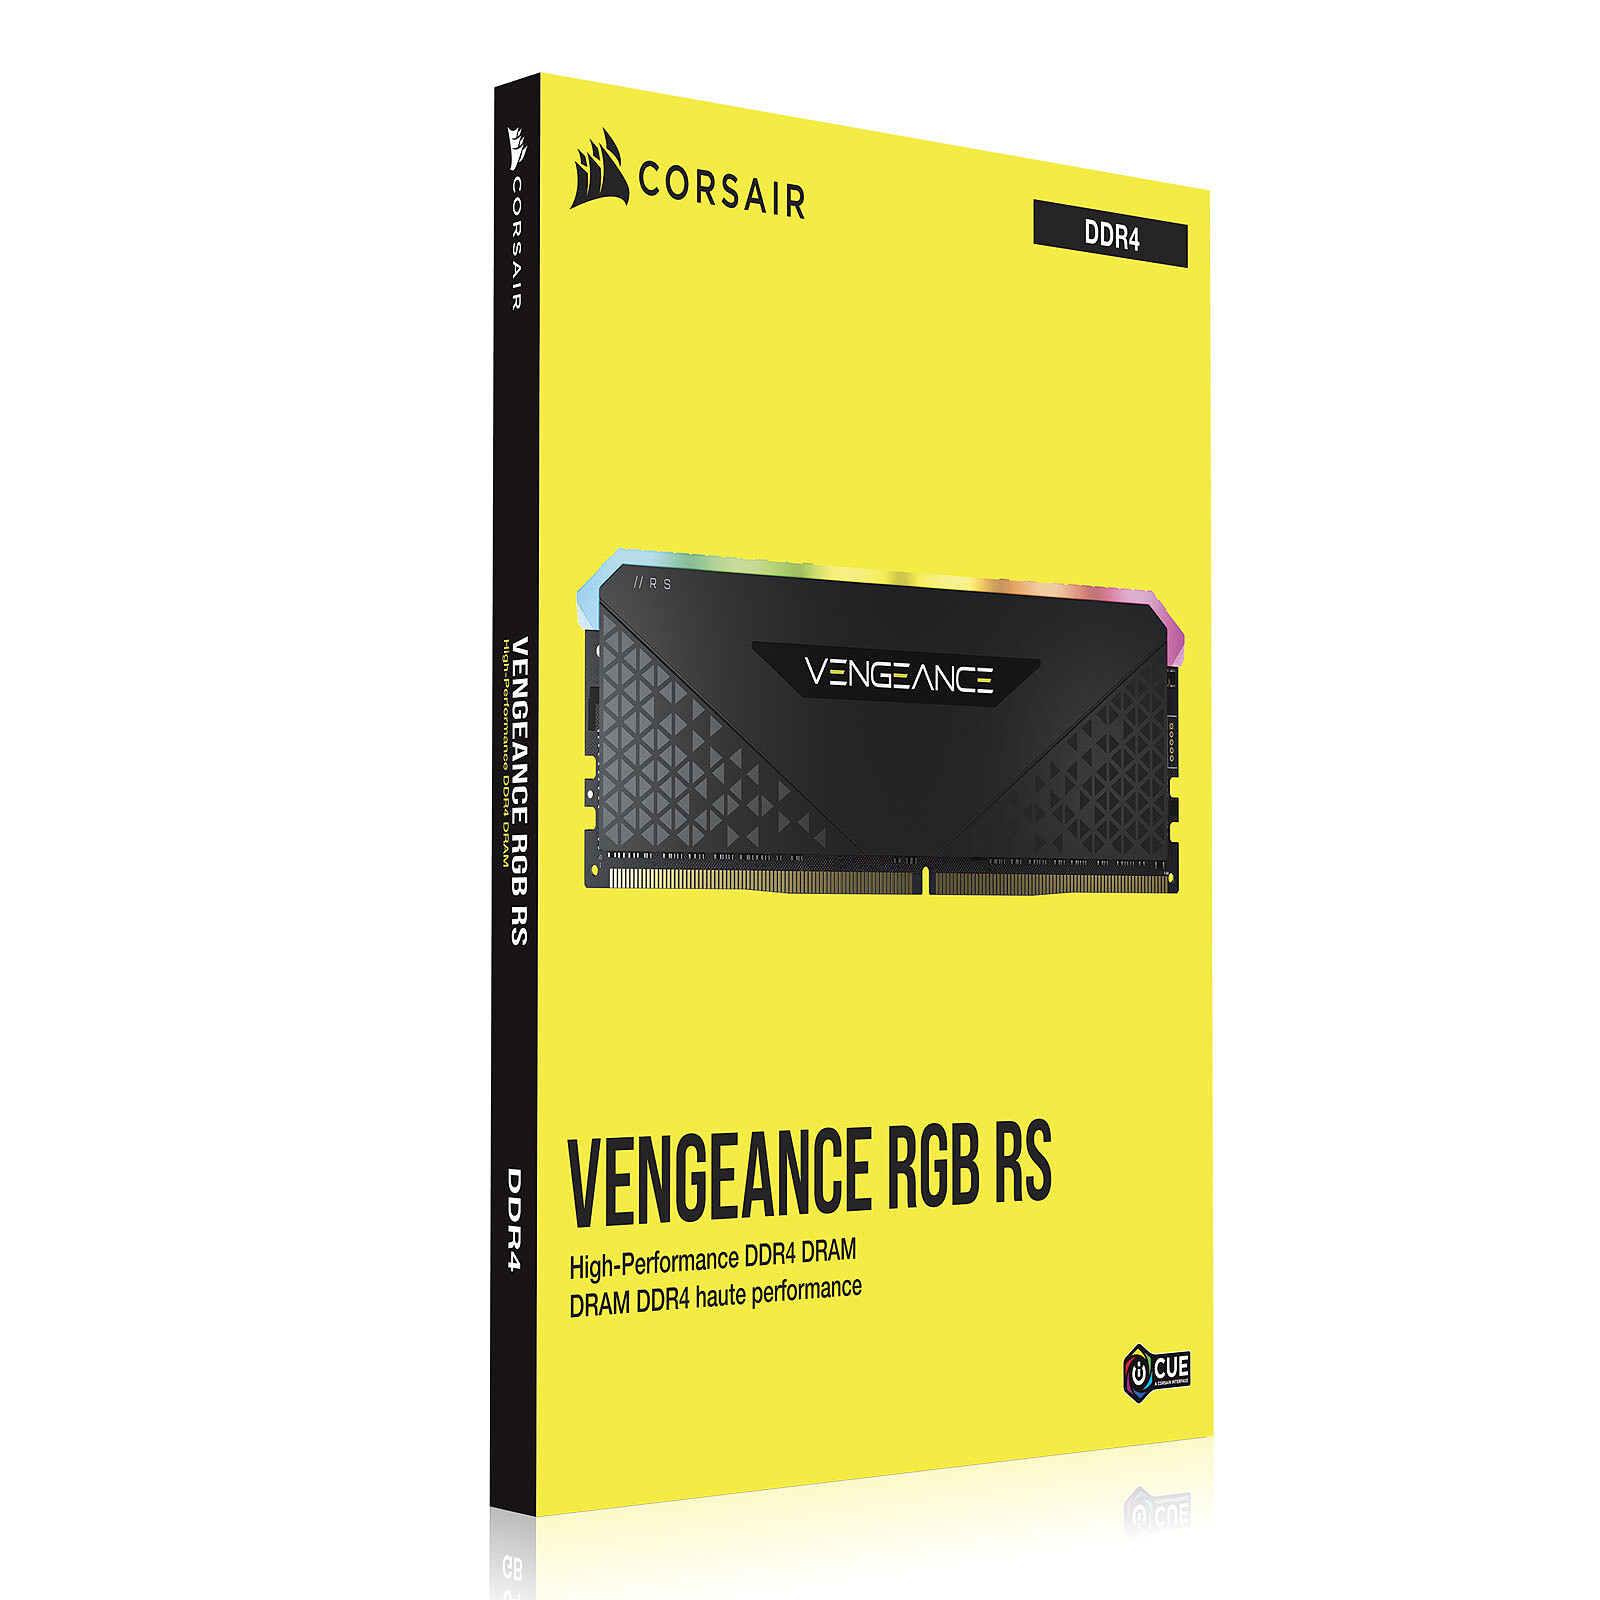 Buy the Corsair VENGEANCE RGB RS 16GB DDR4 Desktop RAM Kit - Black